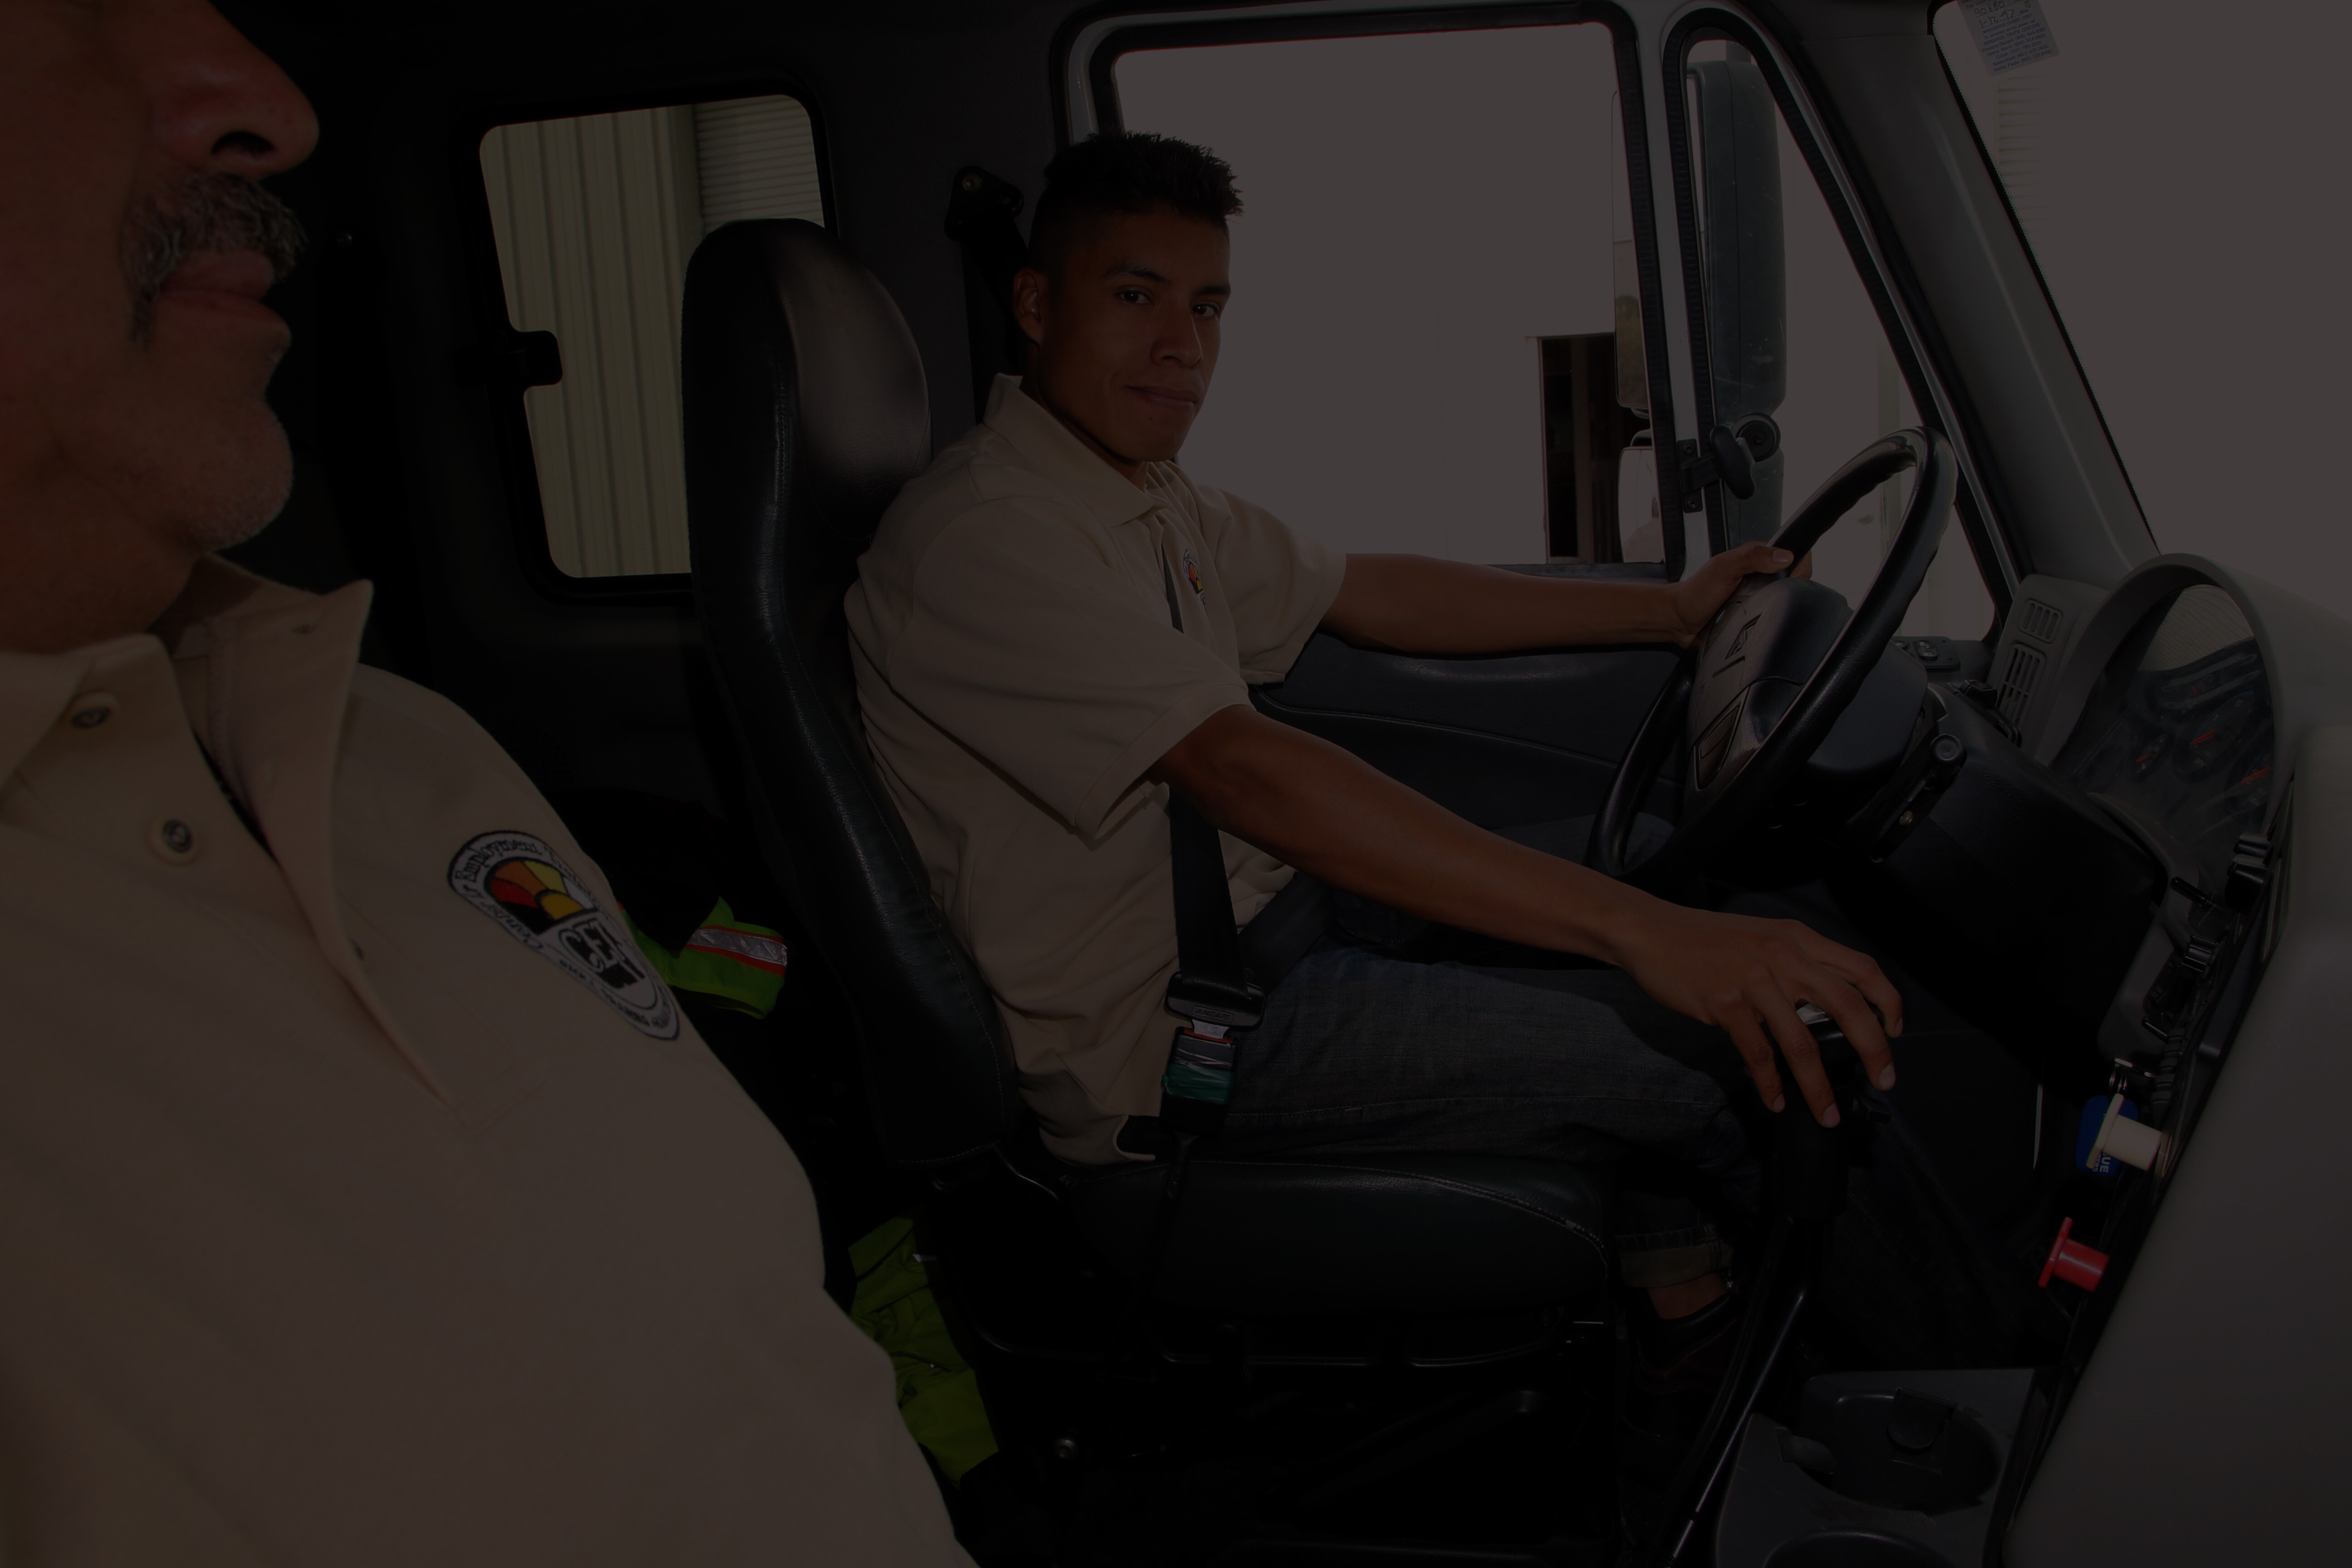 Truck Driver Training Program at CET